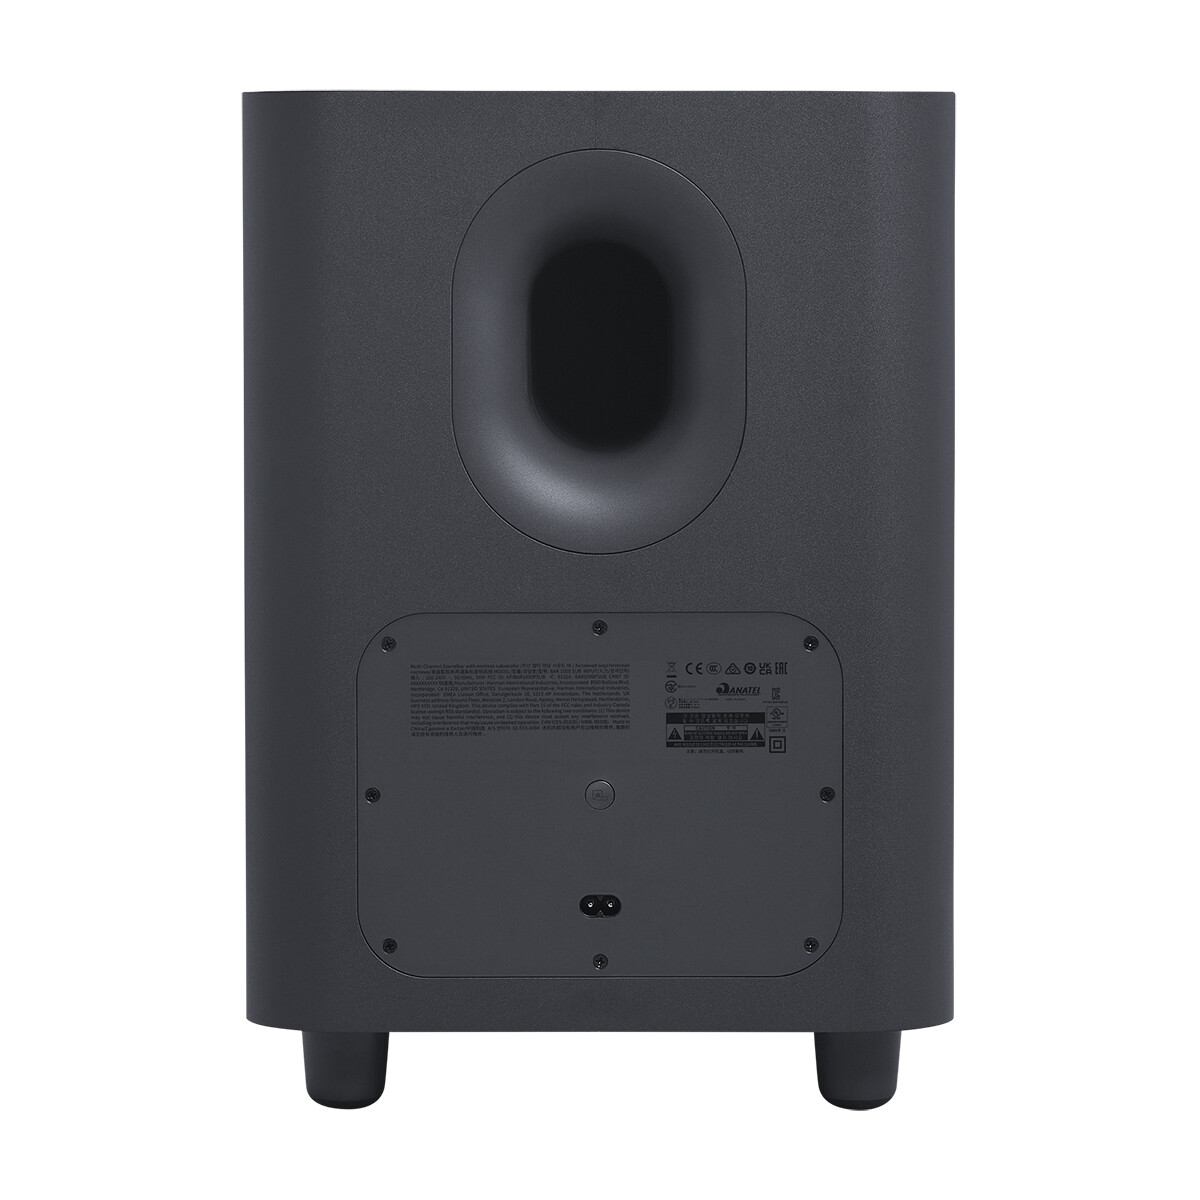 Barra de Sonido JBL Bar 1000 Pro Surround 7.1.4 880W Bluetooth + Subwoofer Black